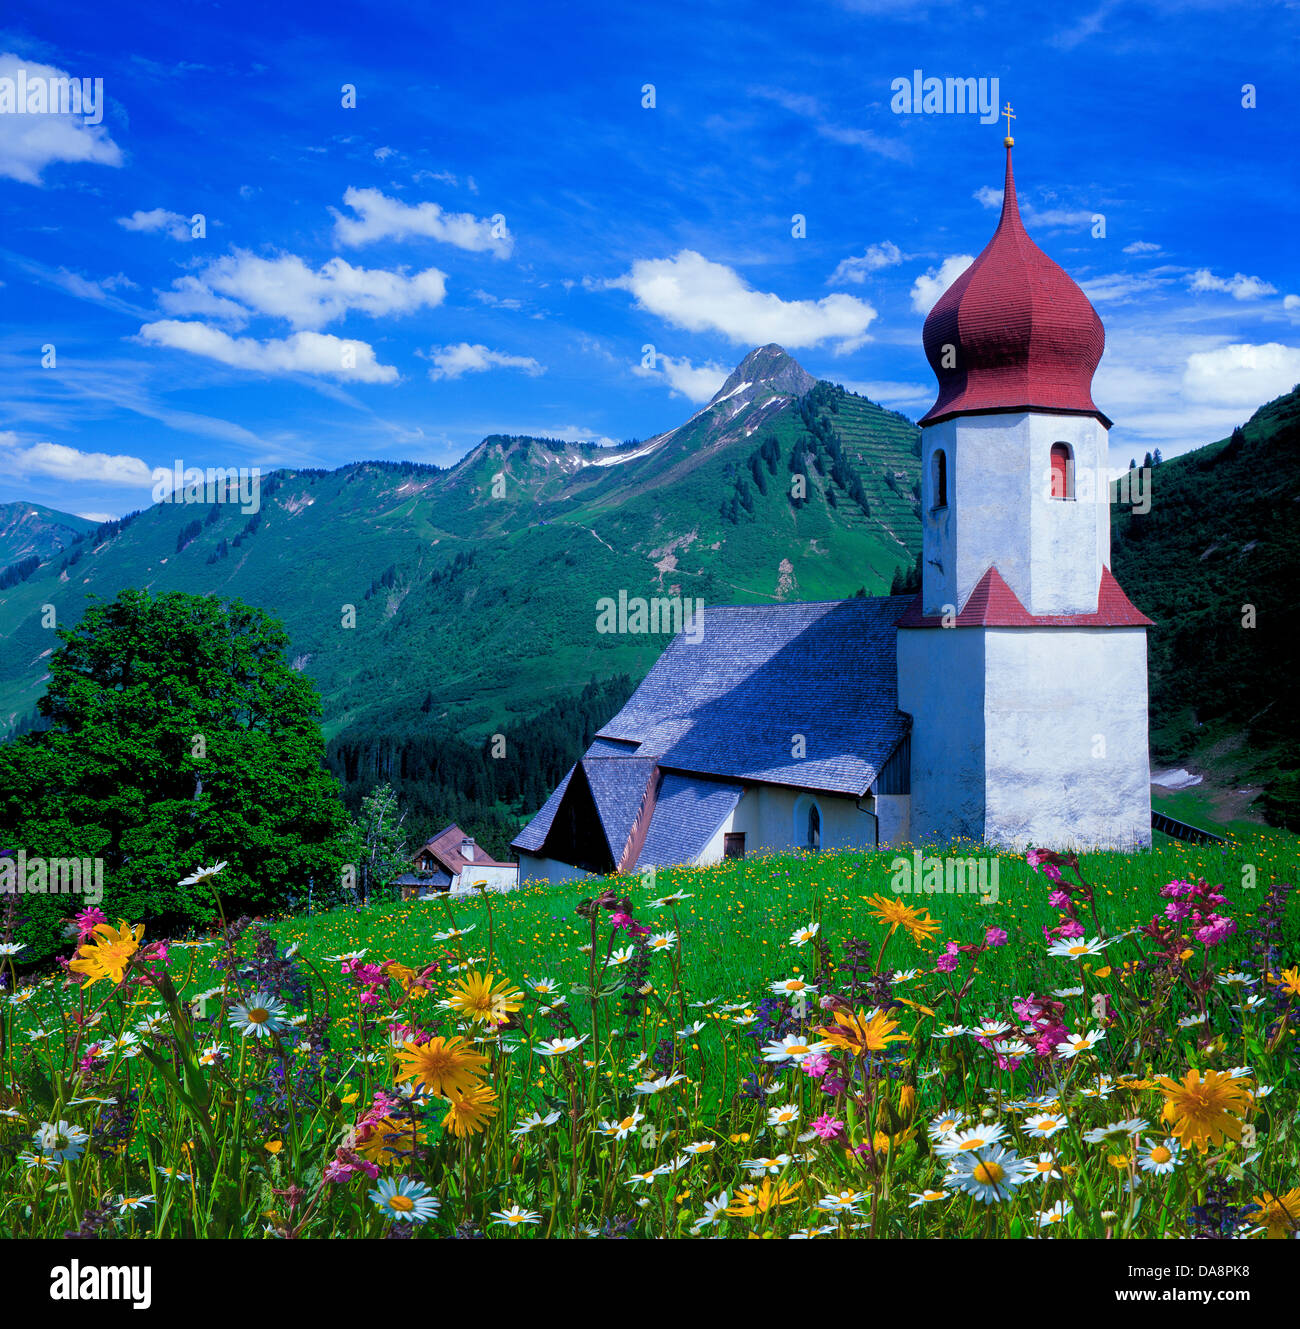 Austria, Europa, Vorarlberg, Bregenzerwald, Damüls, estate, chiesa, chiesa di montagna, prato, fiori di prato, marguerites, alberi, Foto Stock